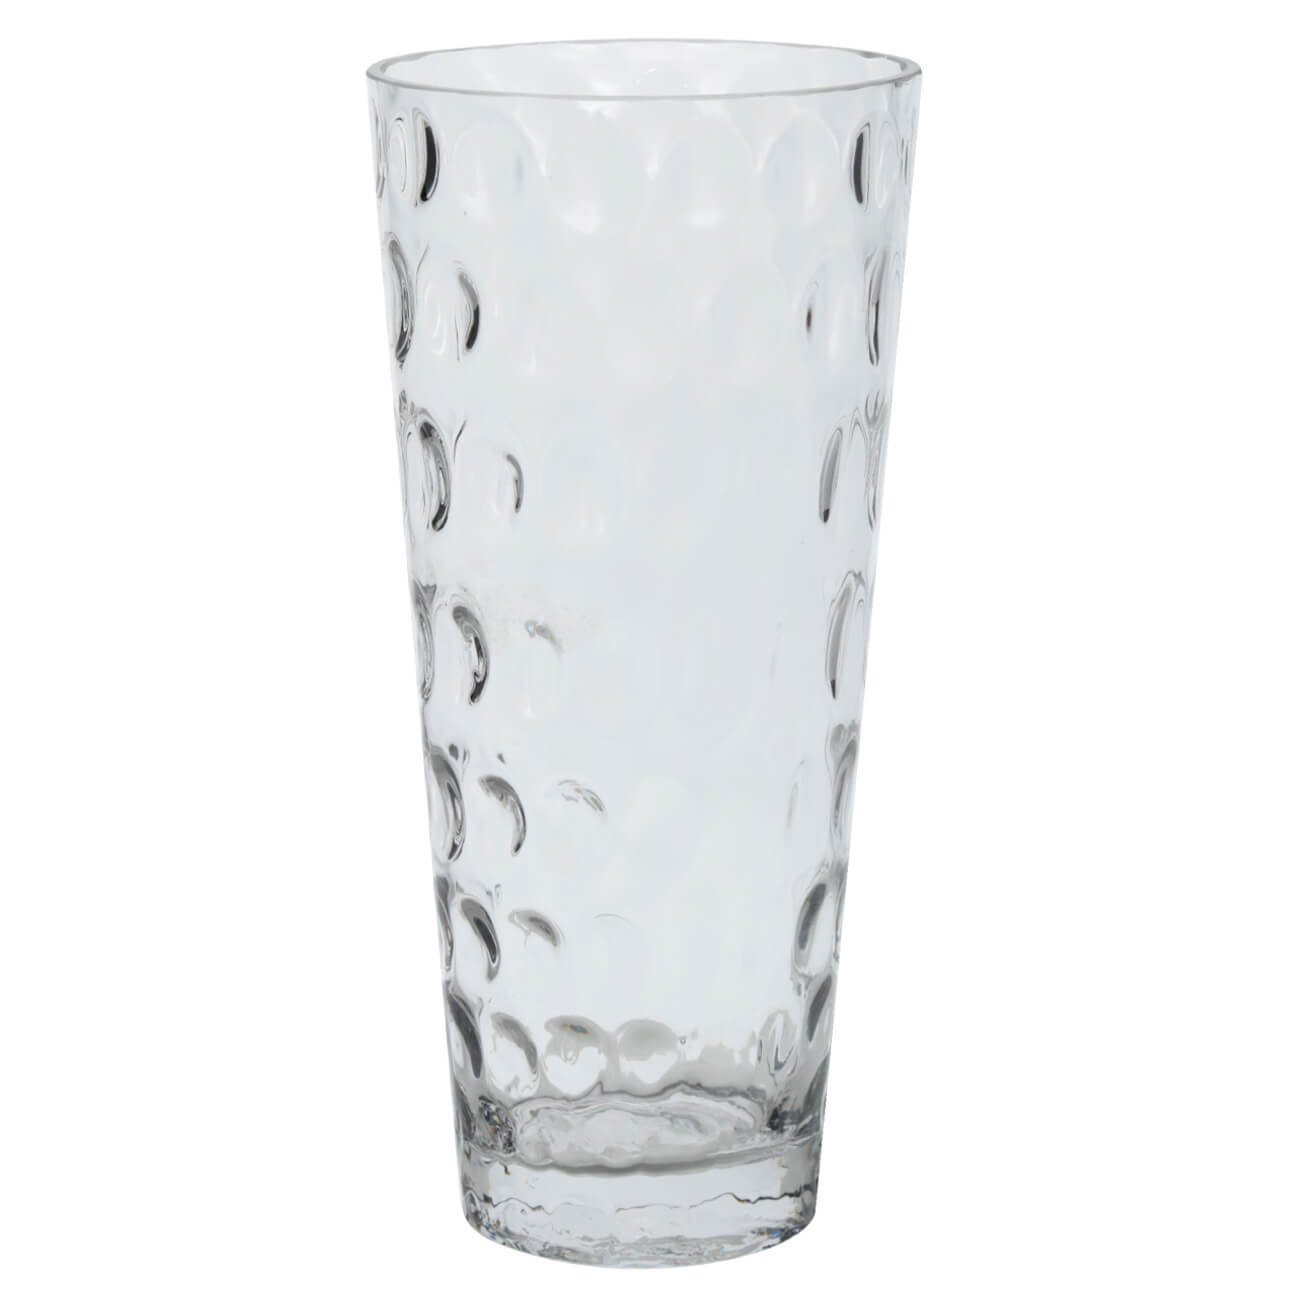 Ваза для цветов, 30 см, стекло, Clear dented ваза для цветов 24 см стекло кракелюр ice